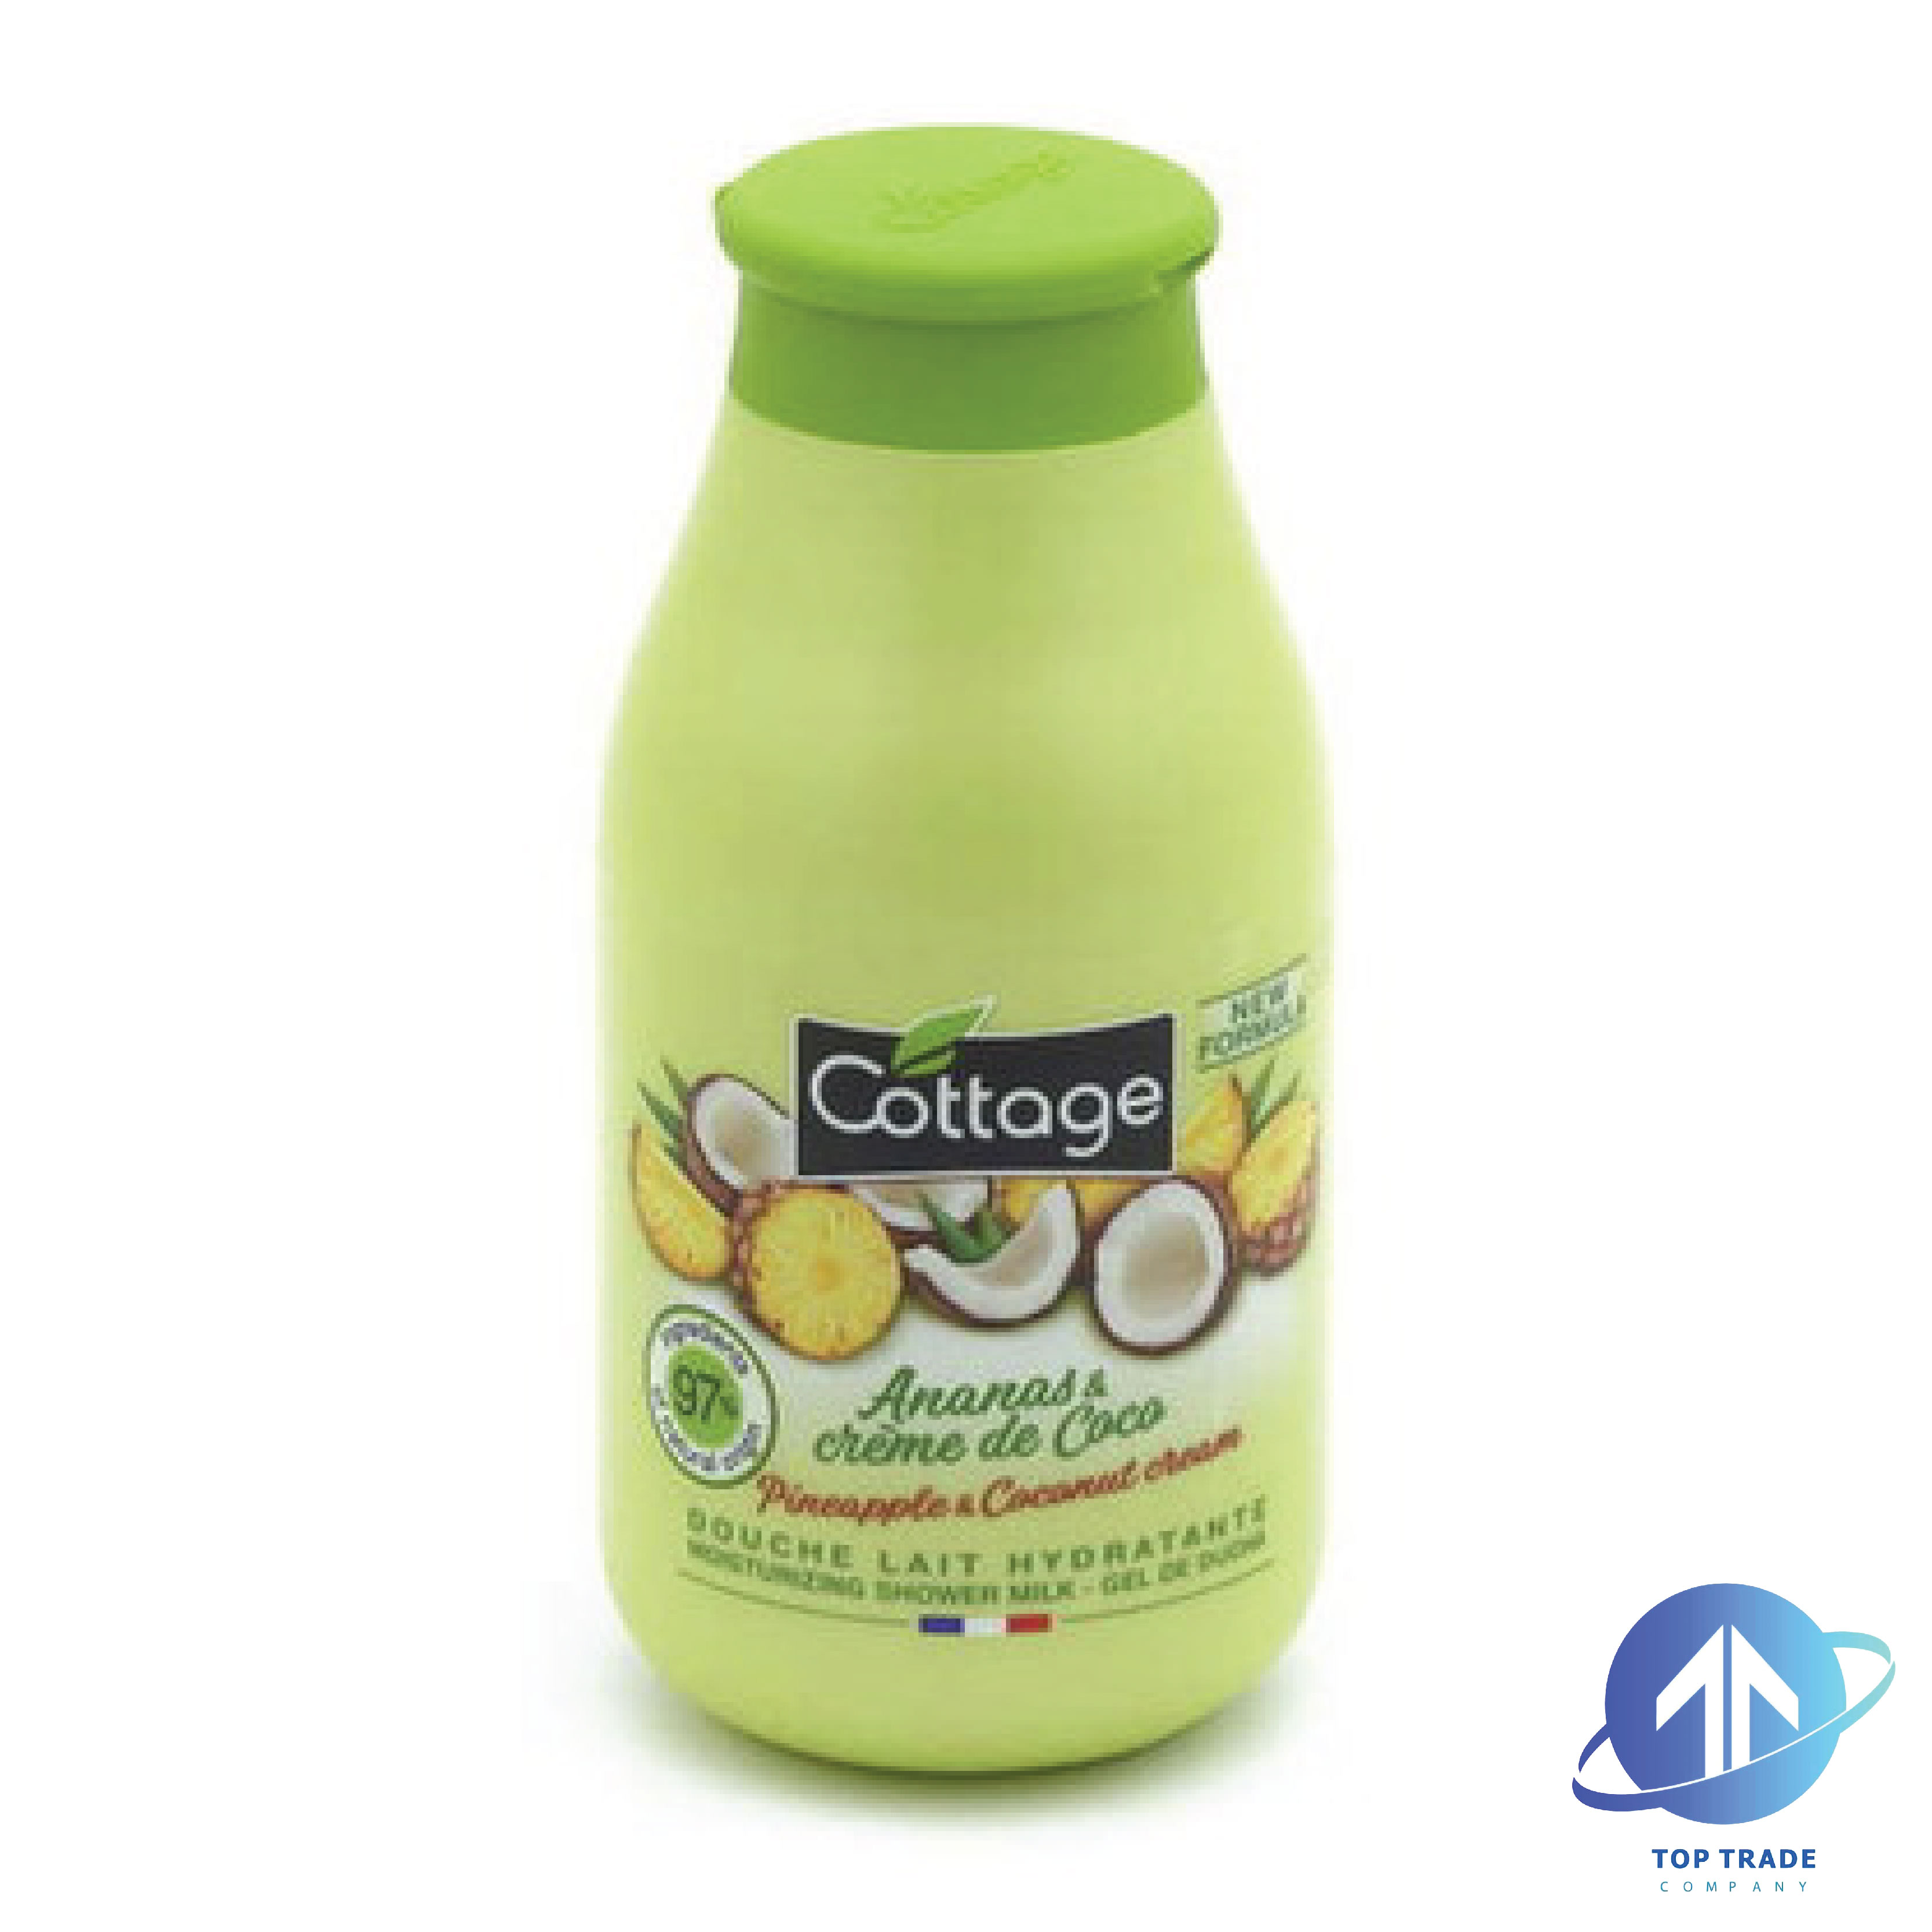 Cottage shower milk Pineapple & Coconut Cream 250ml